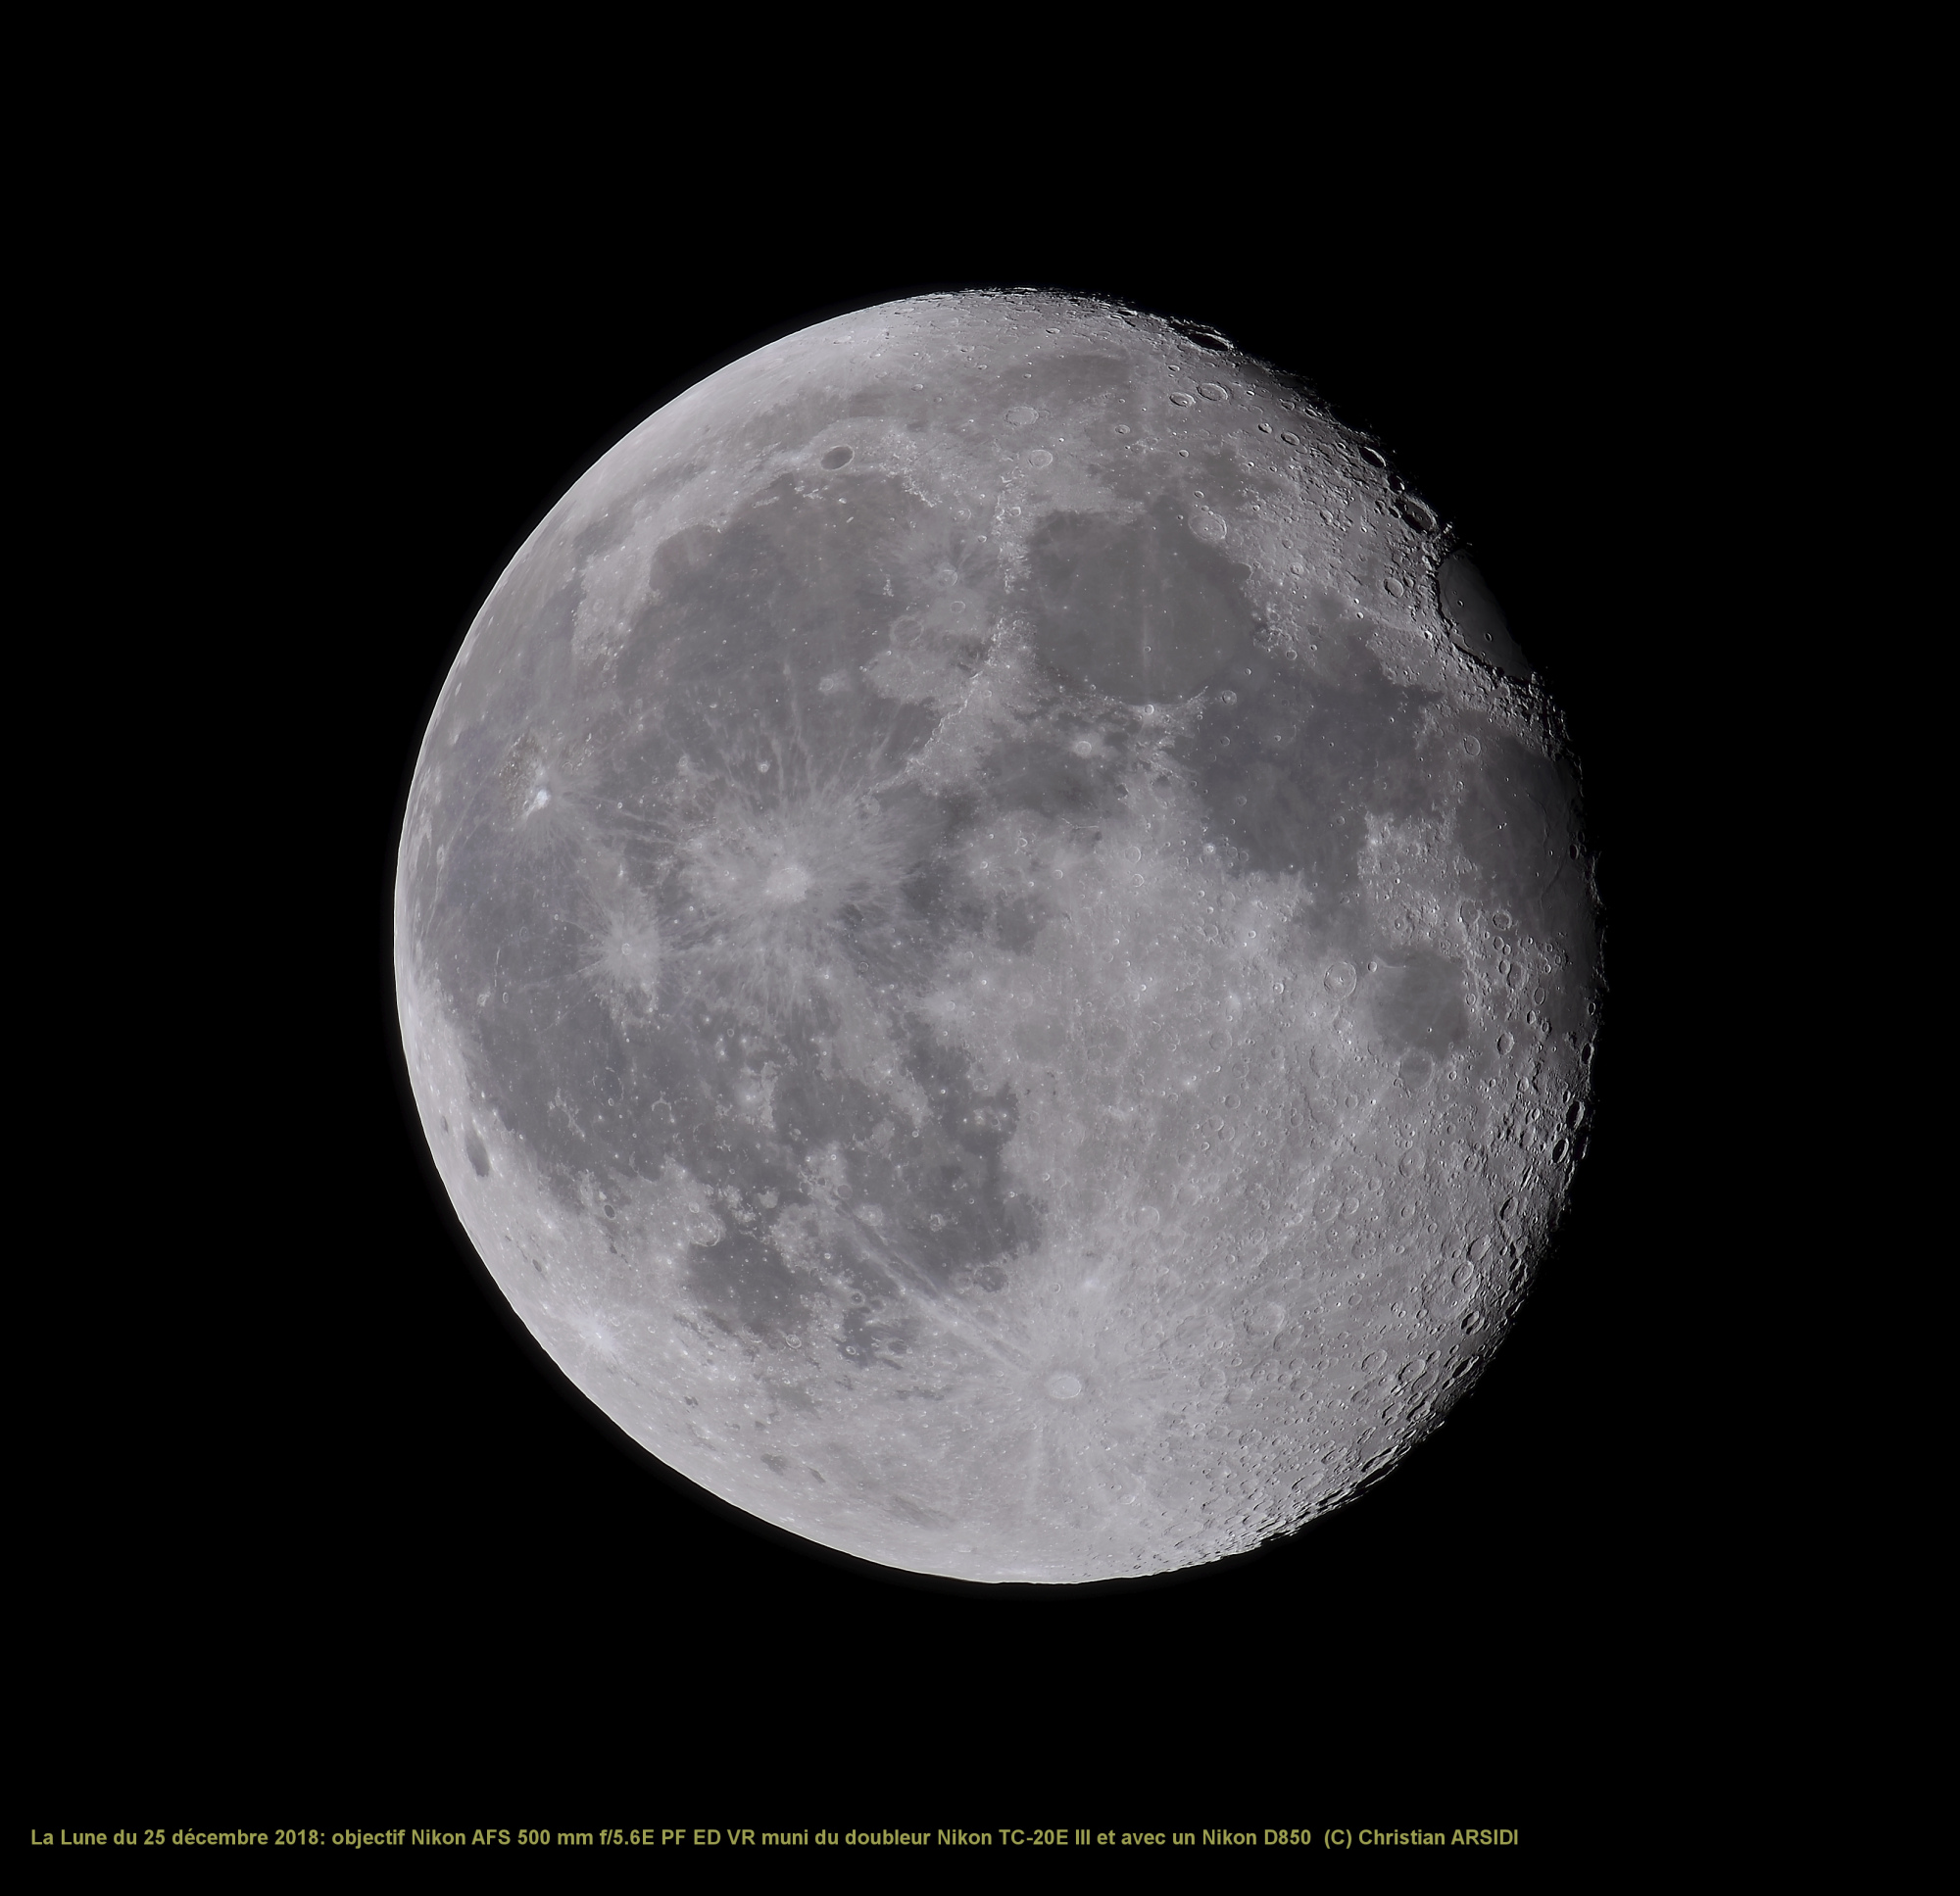 La Lune 30 images MF V2 recadrée_DxO 1  100% TTB JPEG.jpg